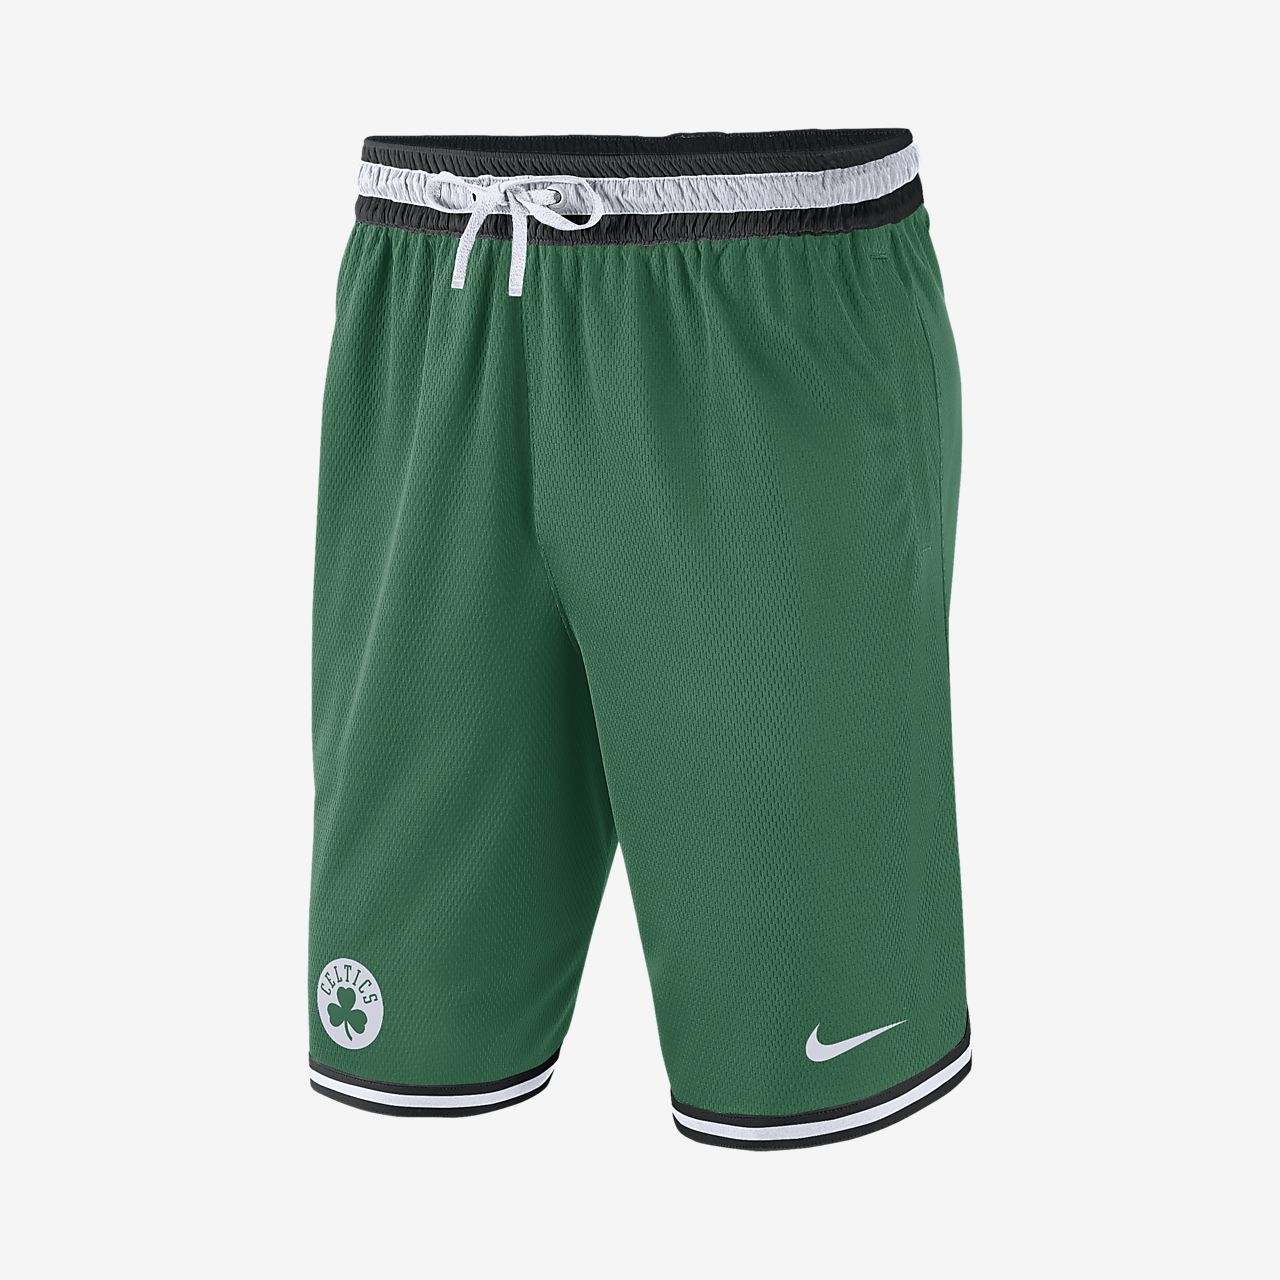 Boston Celtics Shorts / All the best boston celtics gear and ...